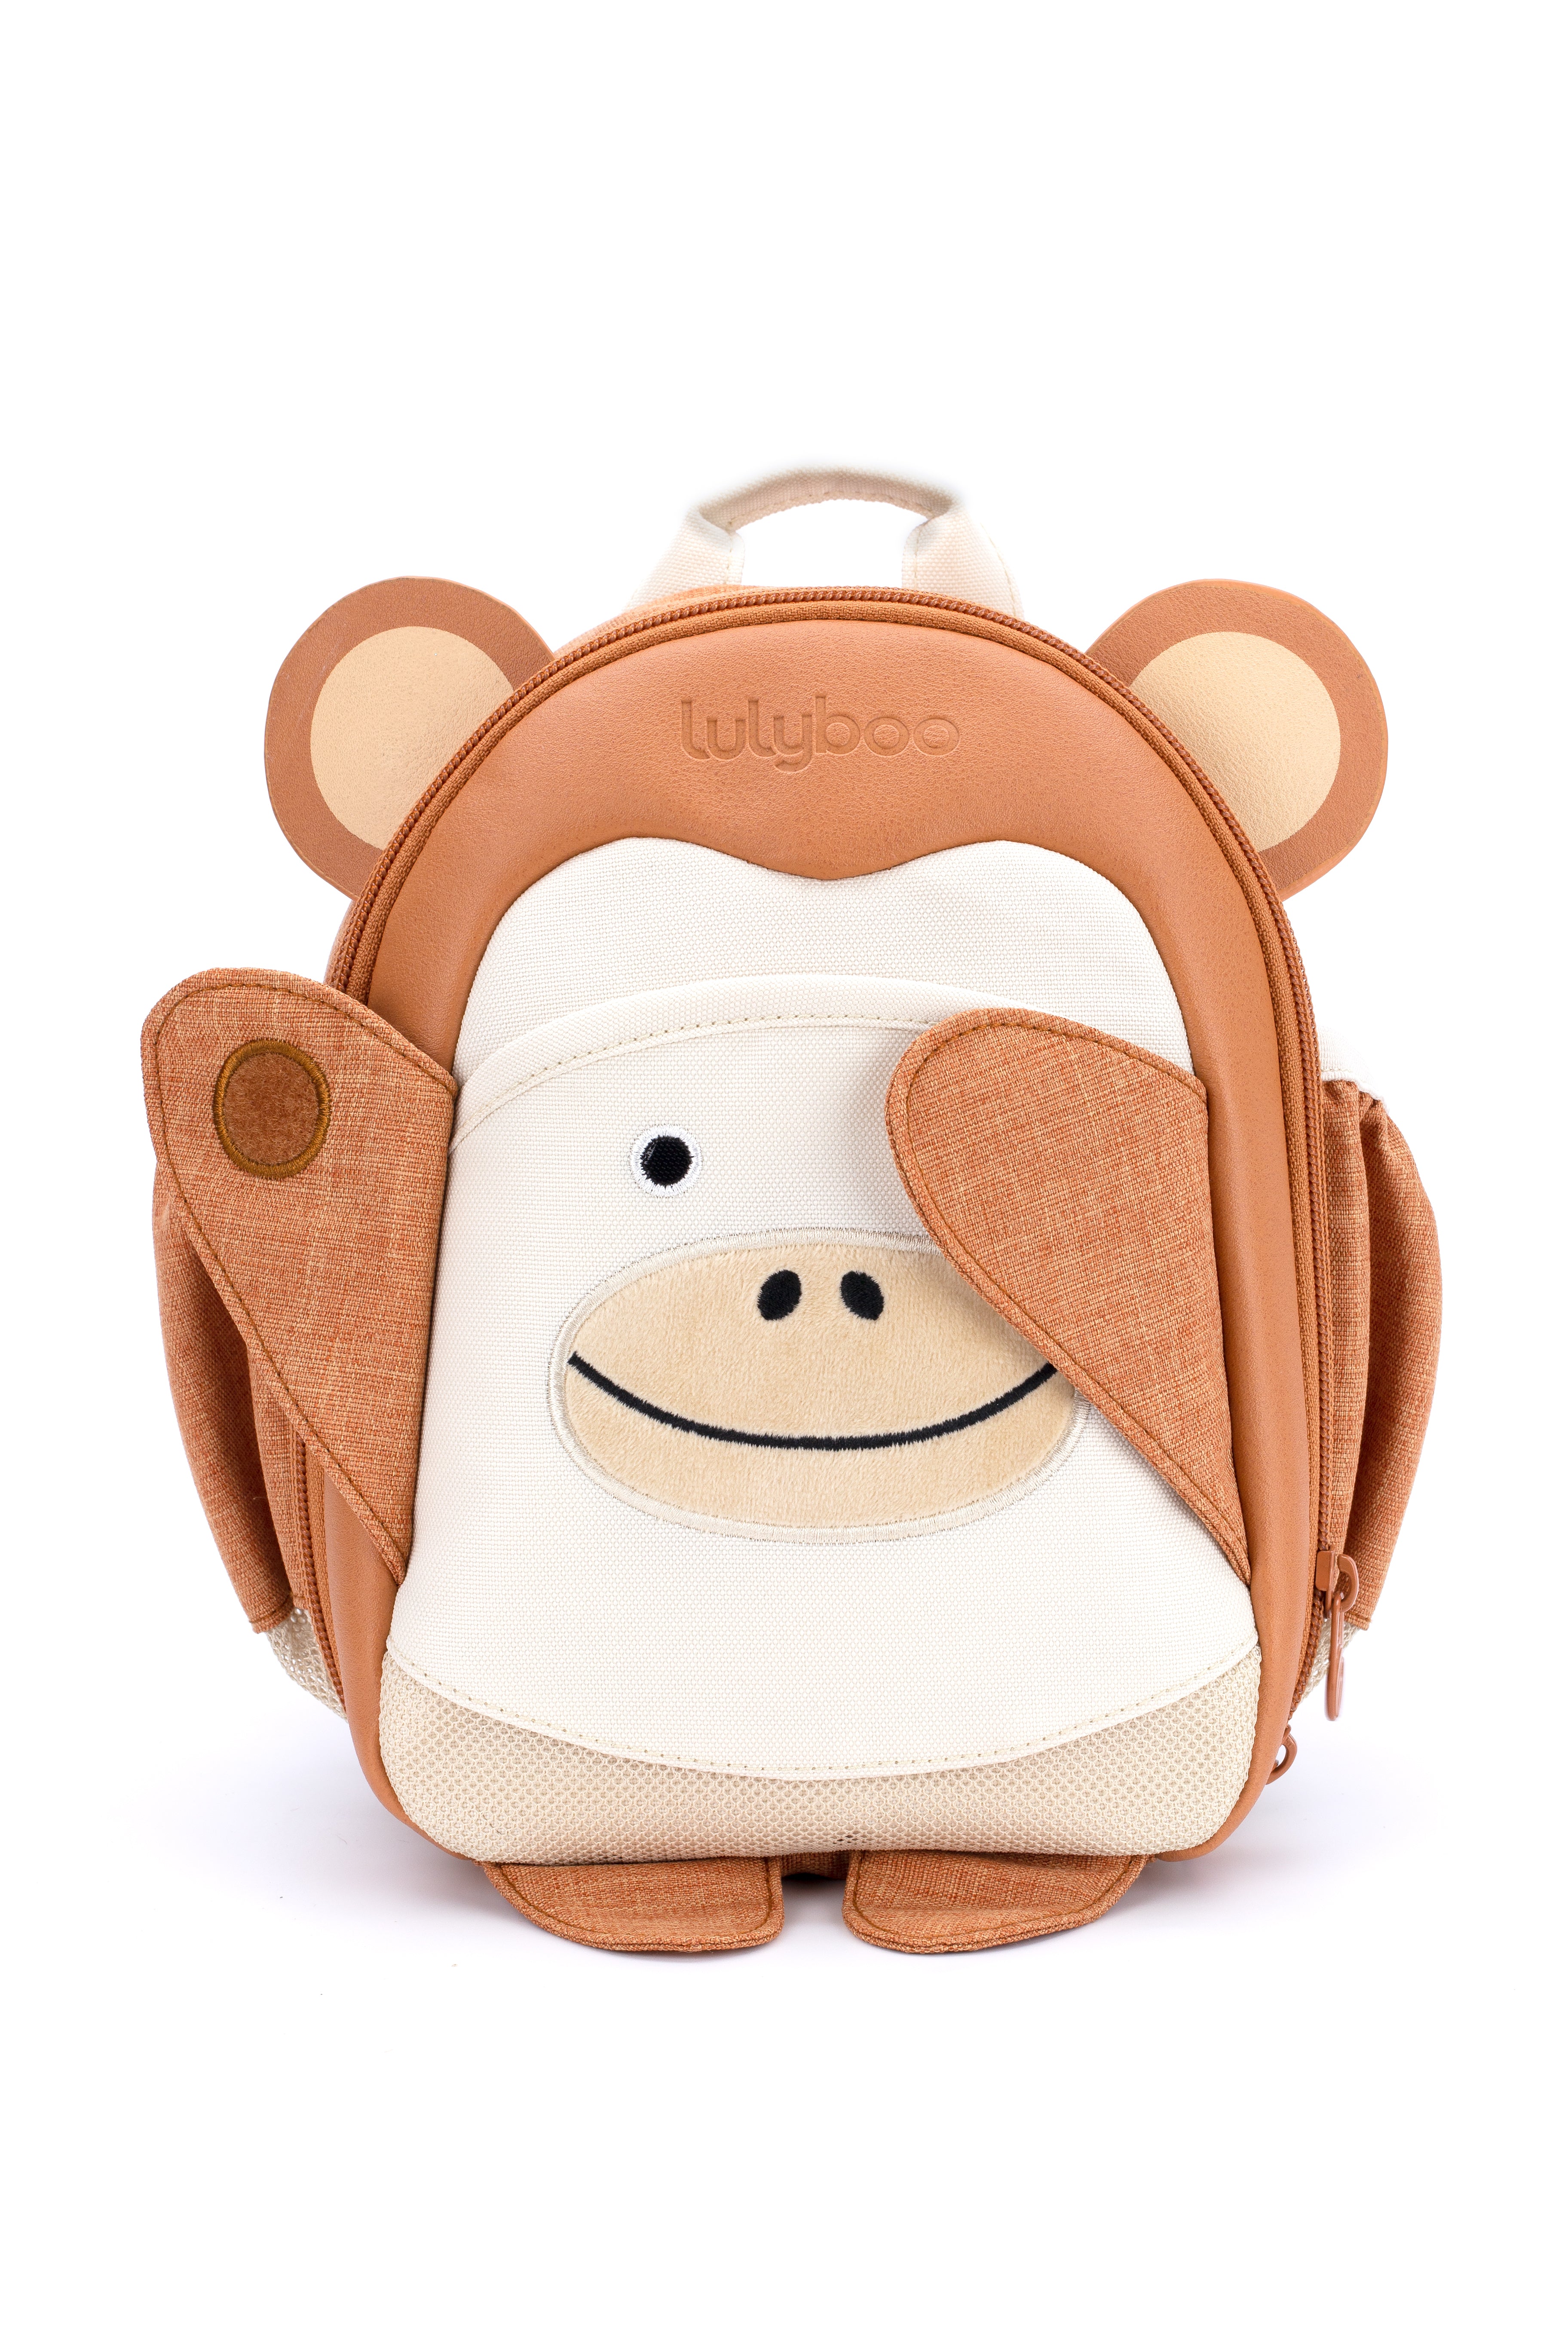 Toddler Backpacks – Lulyboo